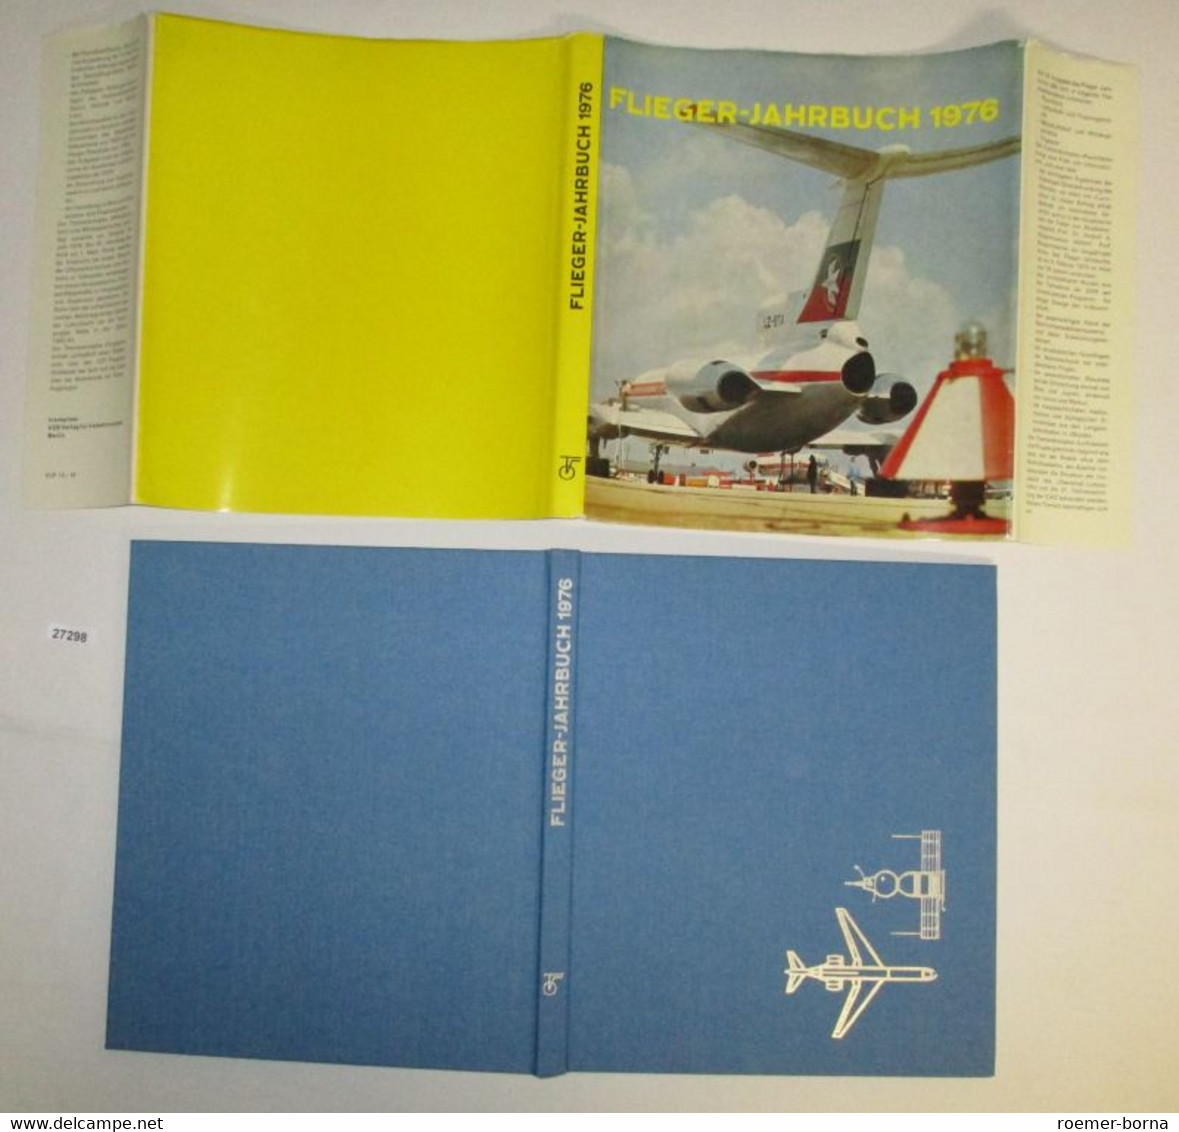 Flieger Jahrbuch 1976 - Calendars